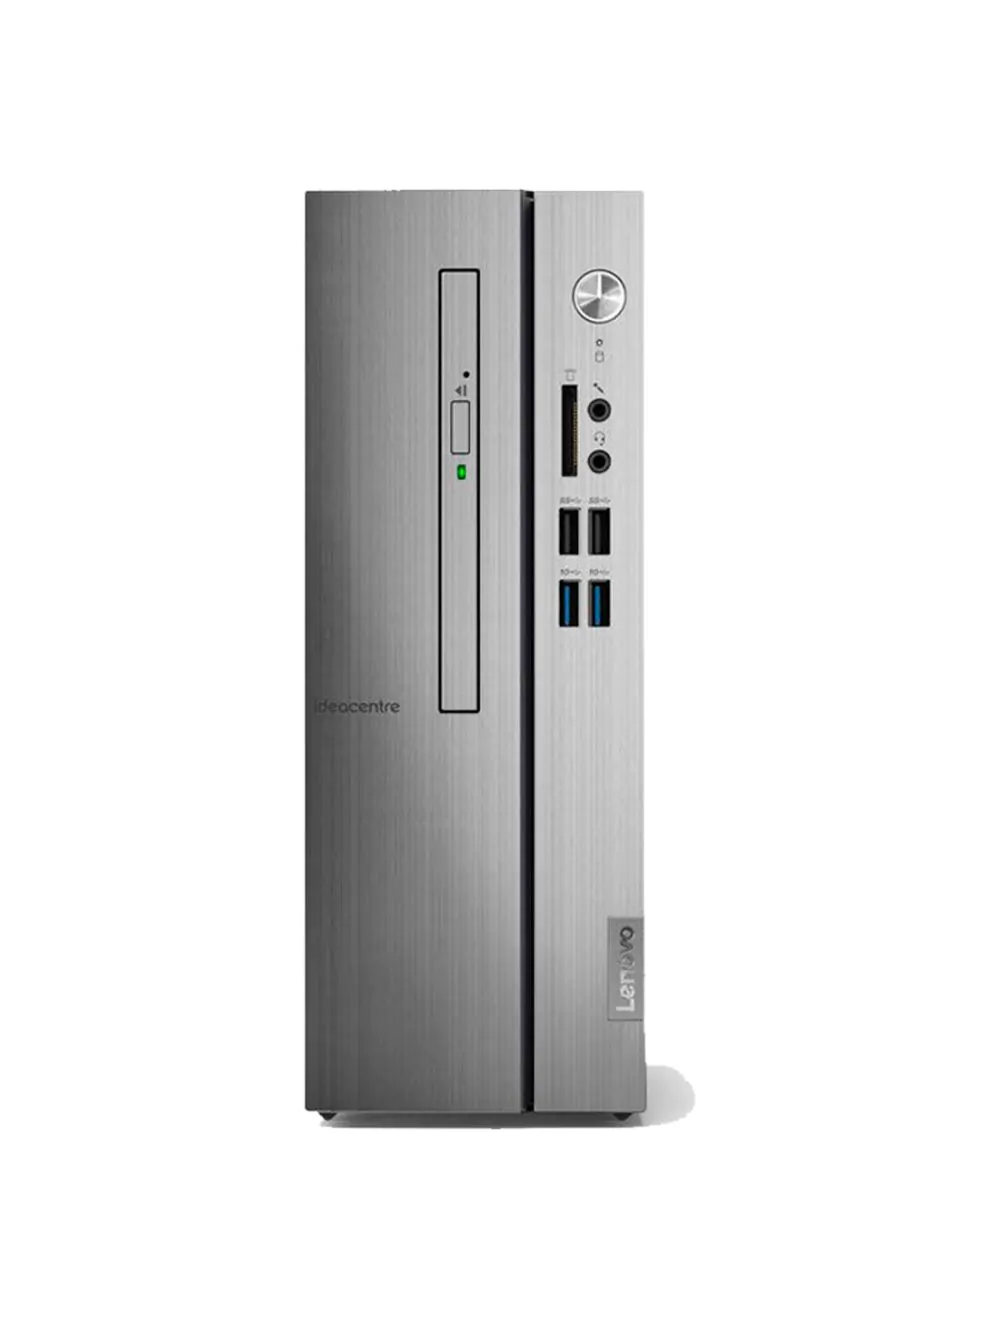 Lenovo Ideacentre 510S (8th Gen Intel Core I3) Tower Desktop